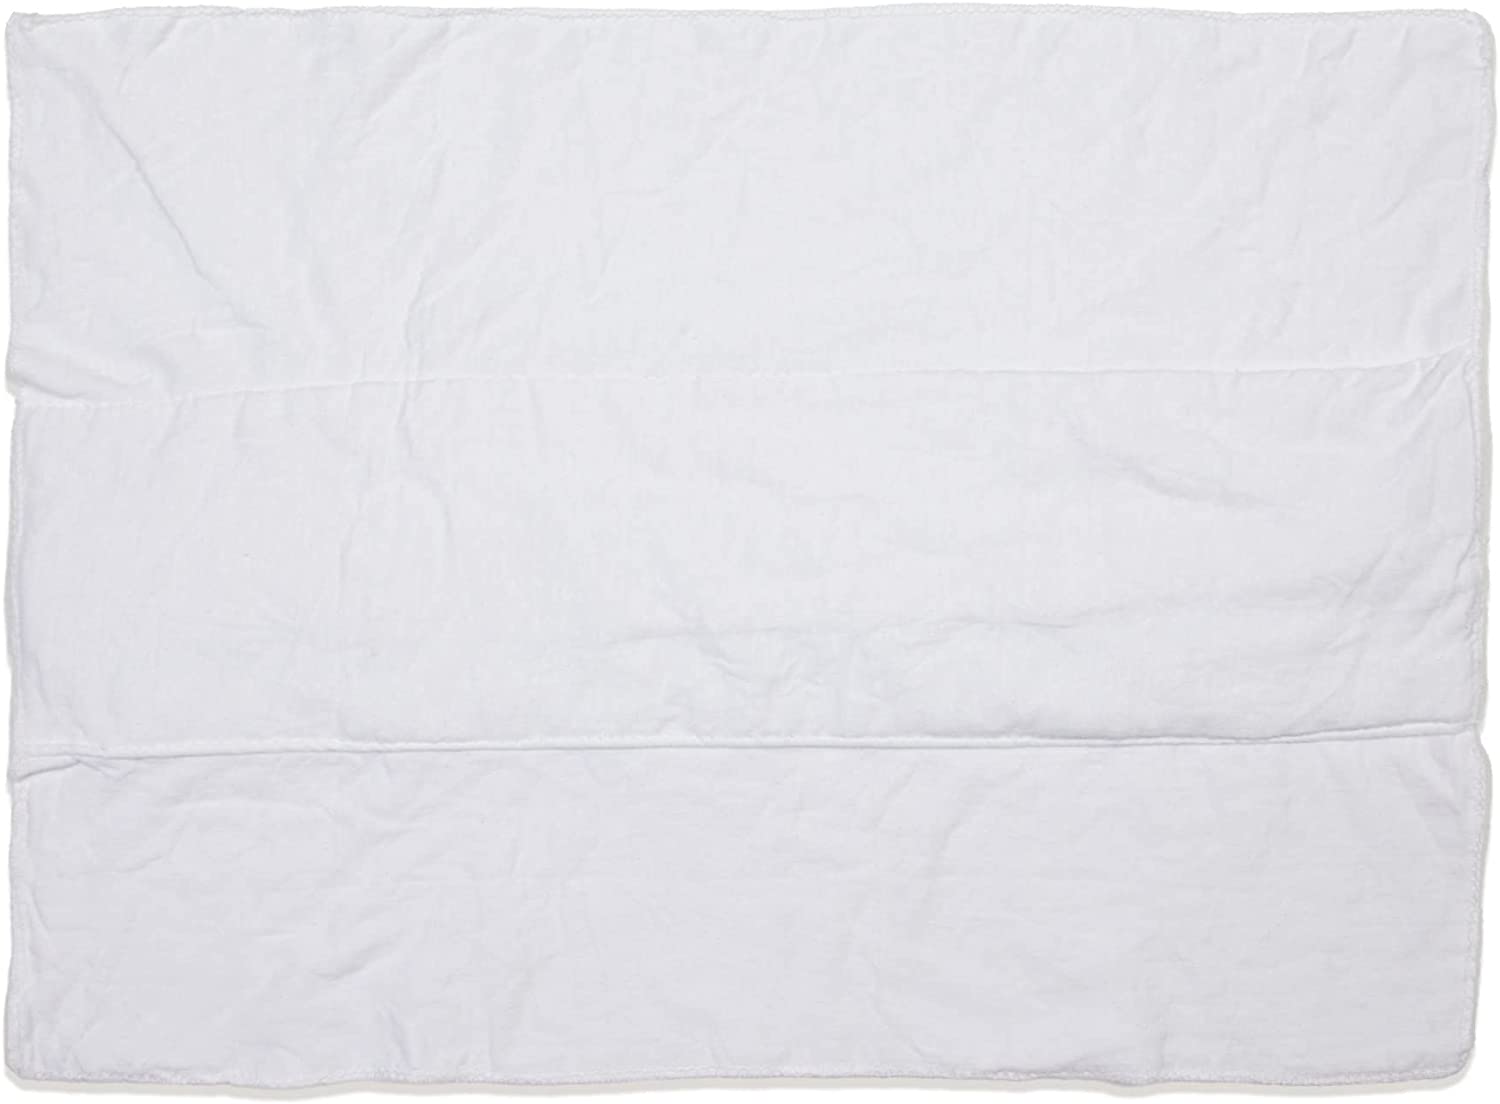 Cloth Diaper Cotton Rags - Apprx 10 lbs/ bag.